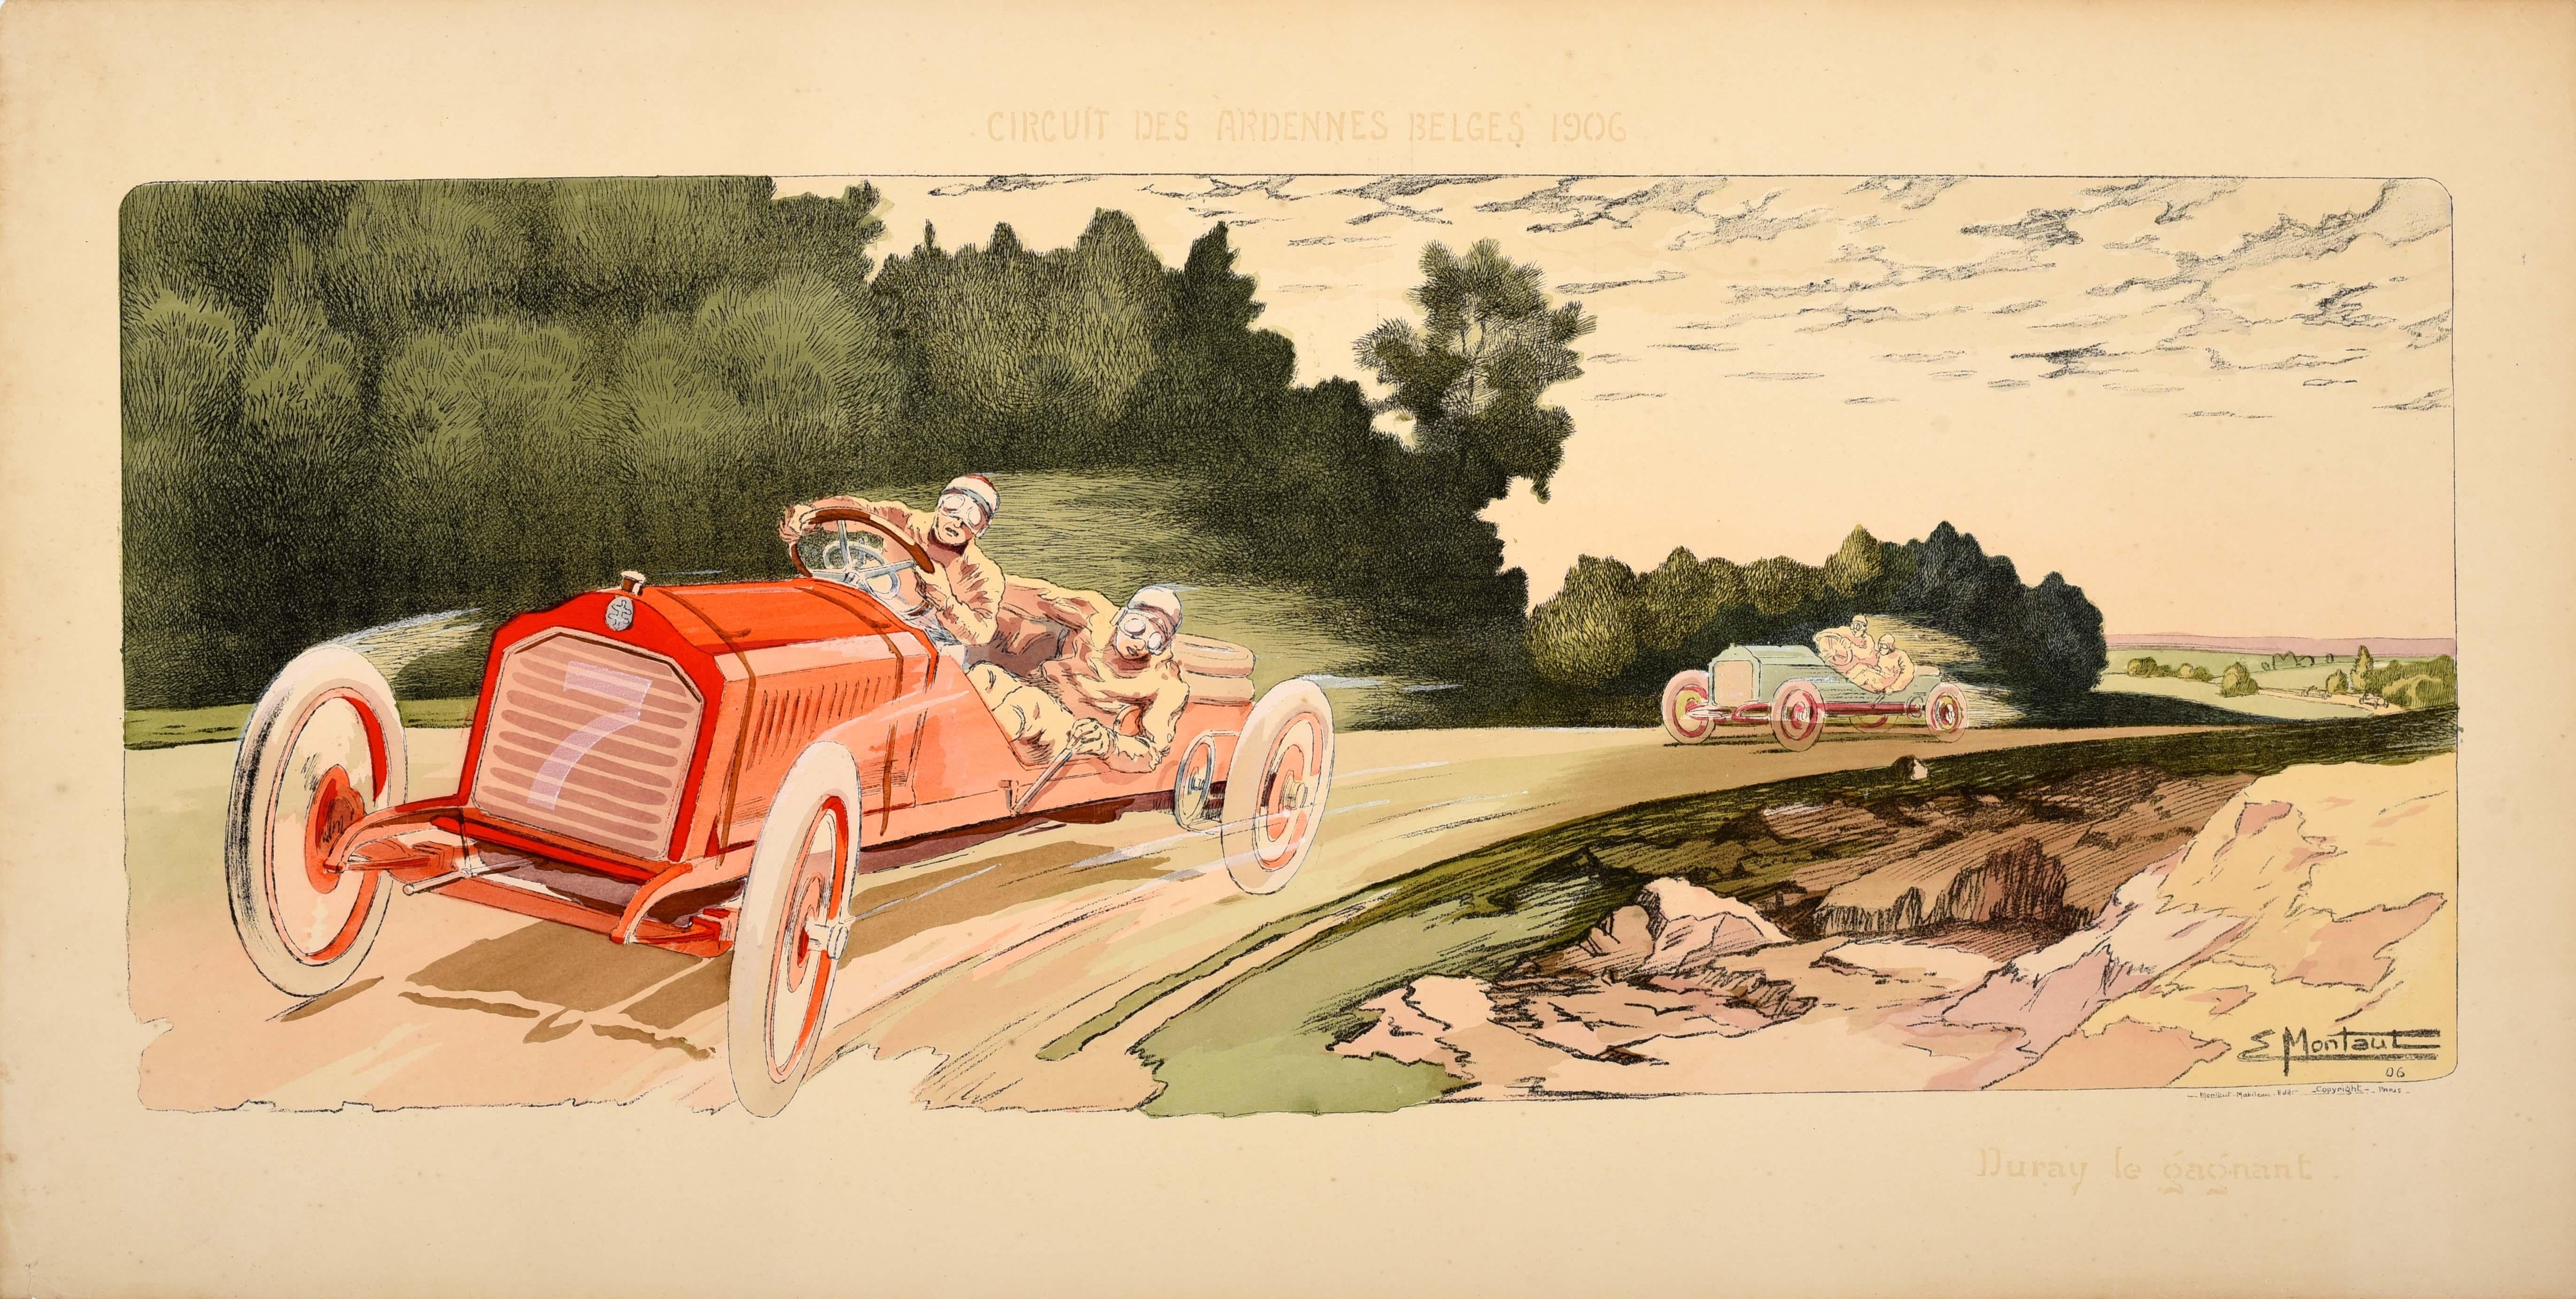 Ernest Montaut Print - Original Vintage Motorsport Poster Circuit Des Ardennes Belge 1906 Arthur Duray